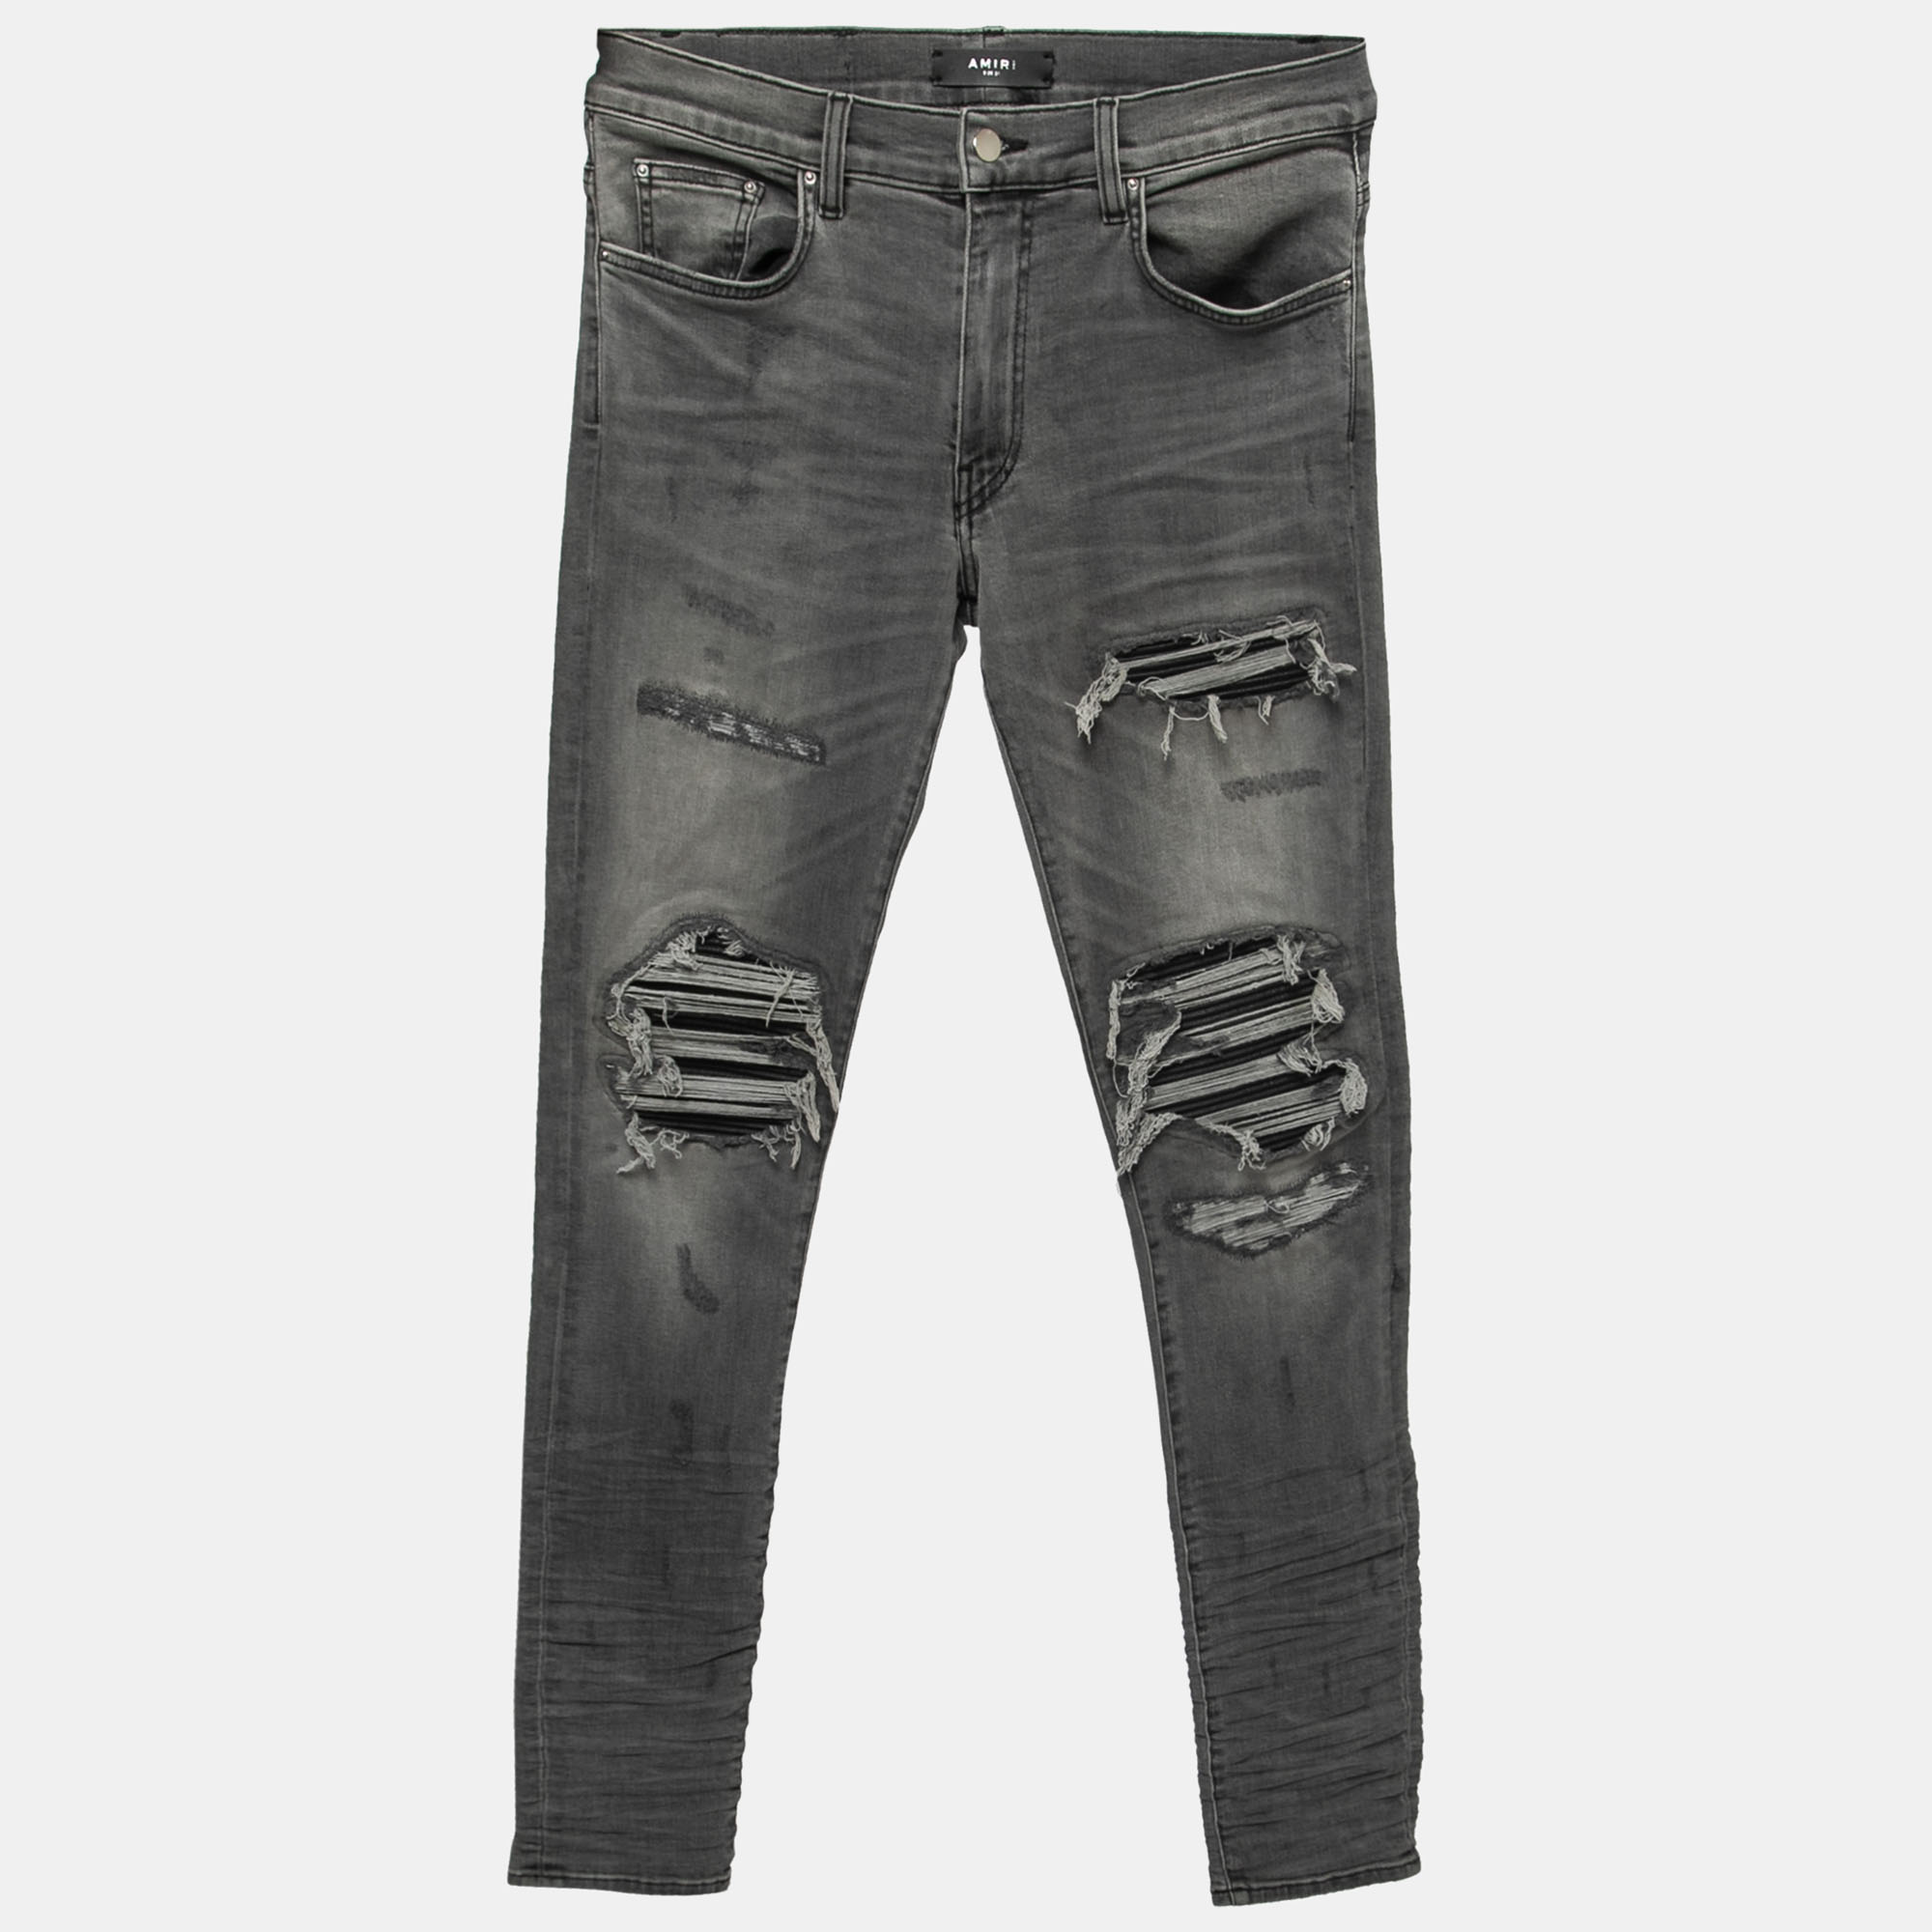 Pre-owned Amiri Grey Distressed Denim Skinny Jeans M Waist 31"